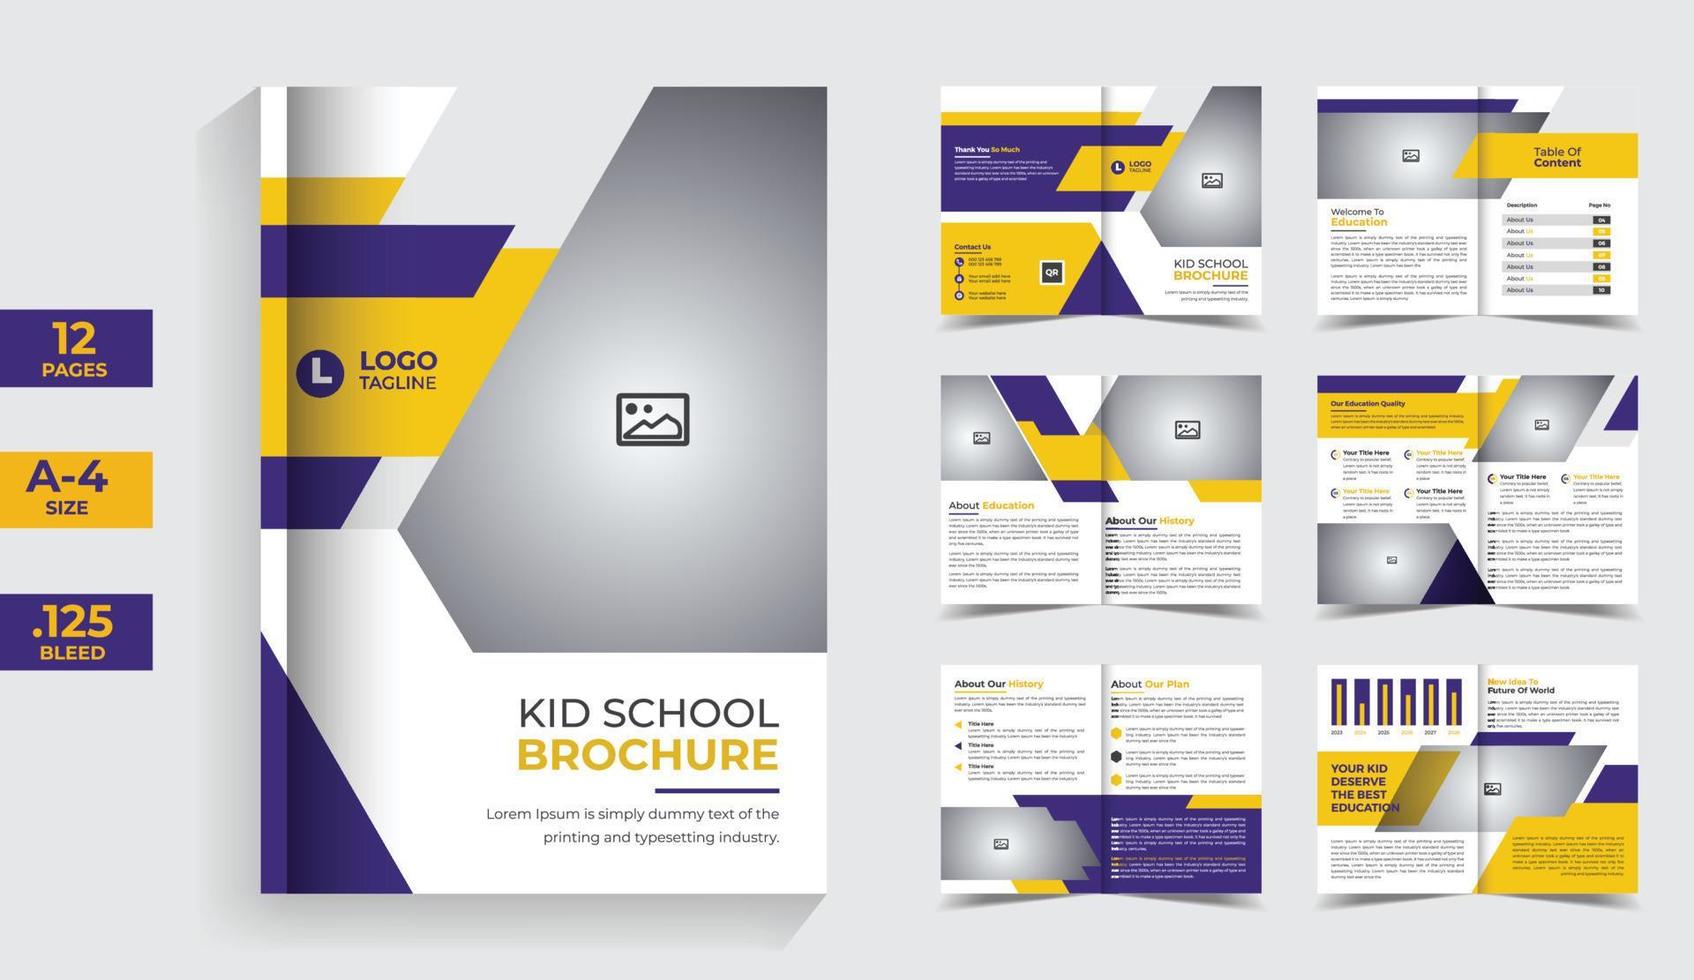 Kid School Education company bi-fold brochure template vector